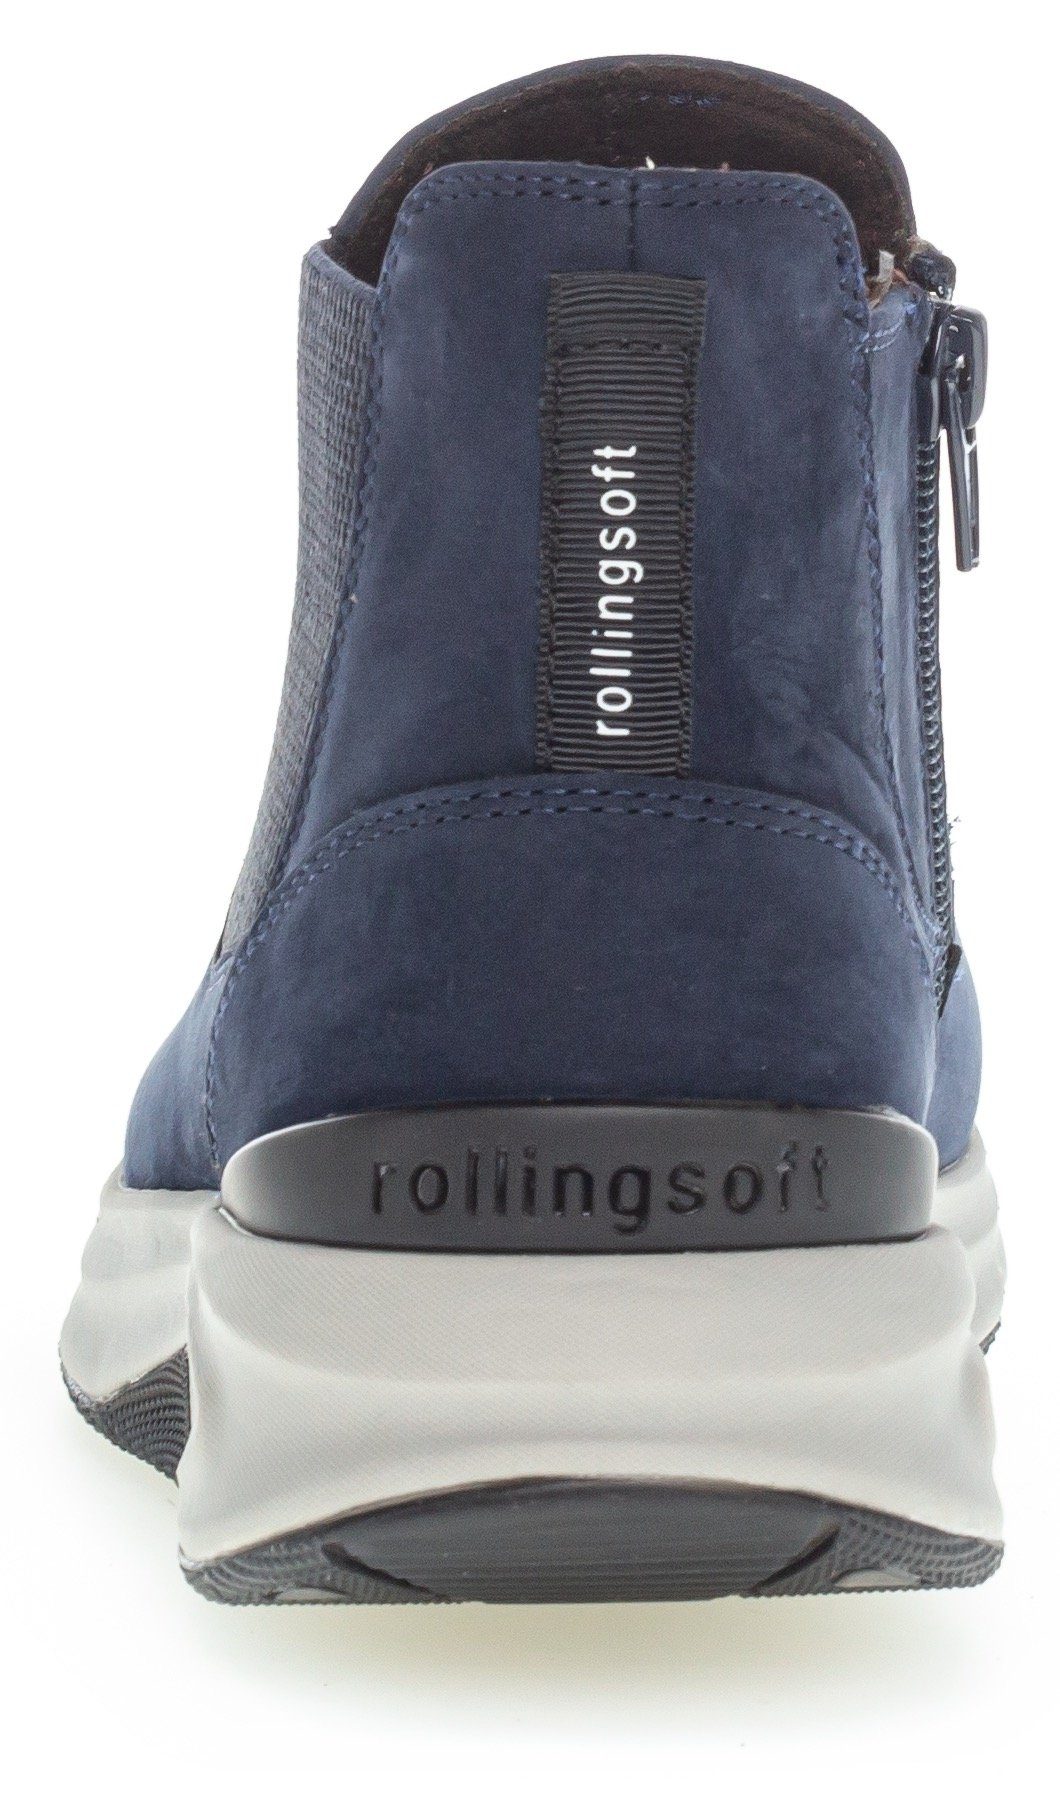 mit Blau Gabor Logo Rollingsoft (blue) Ferse an der Chelseaboots